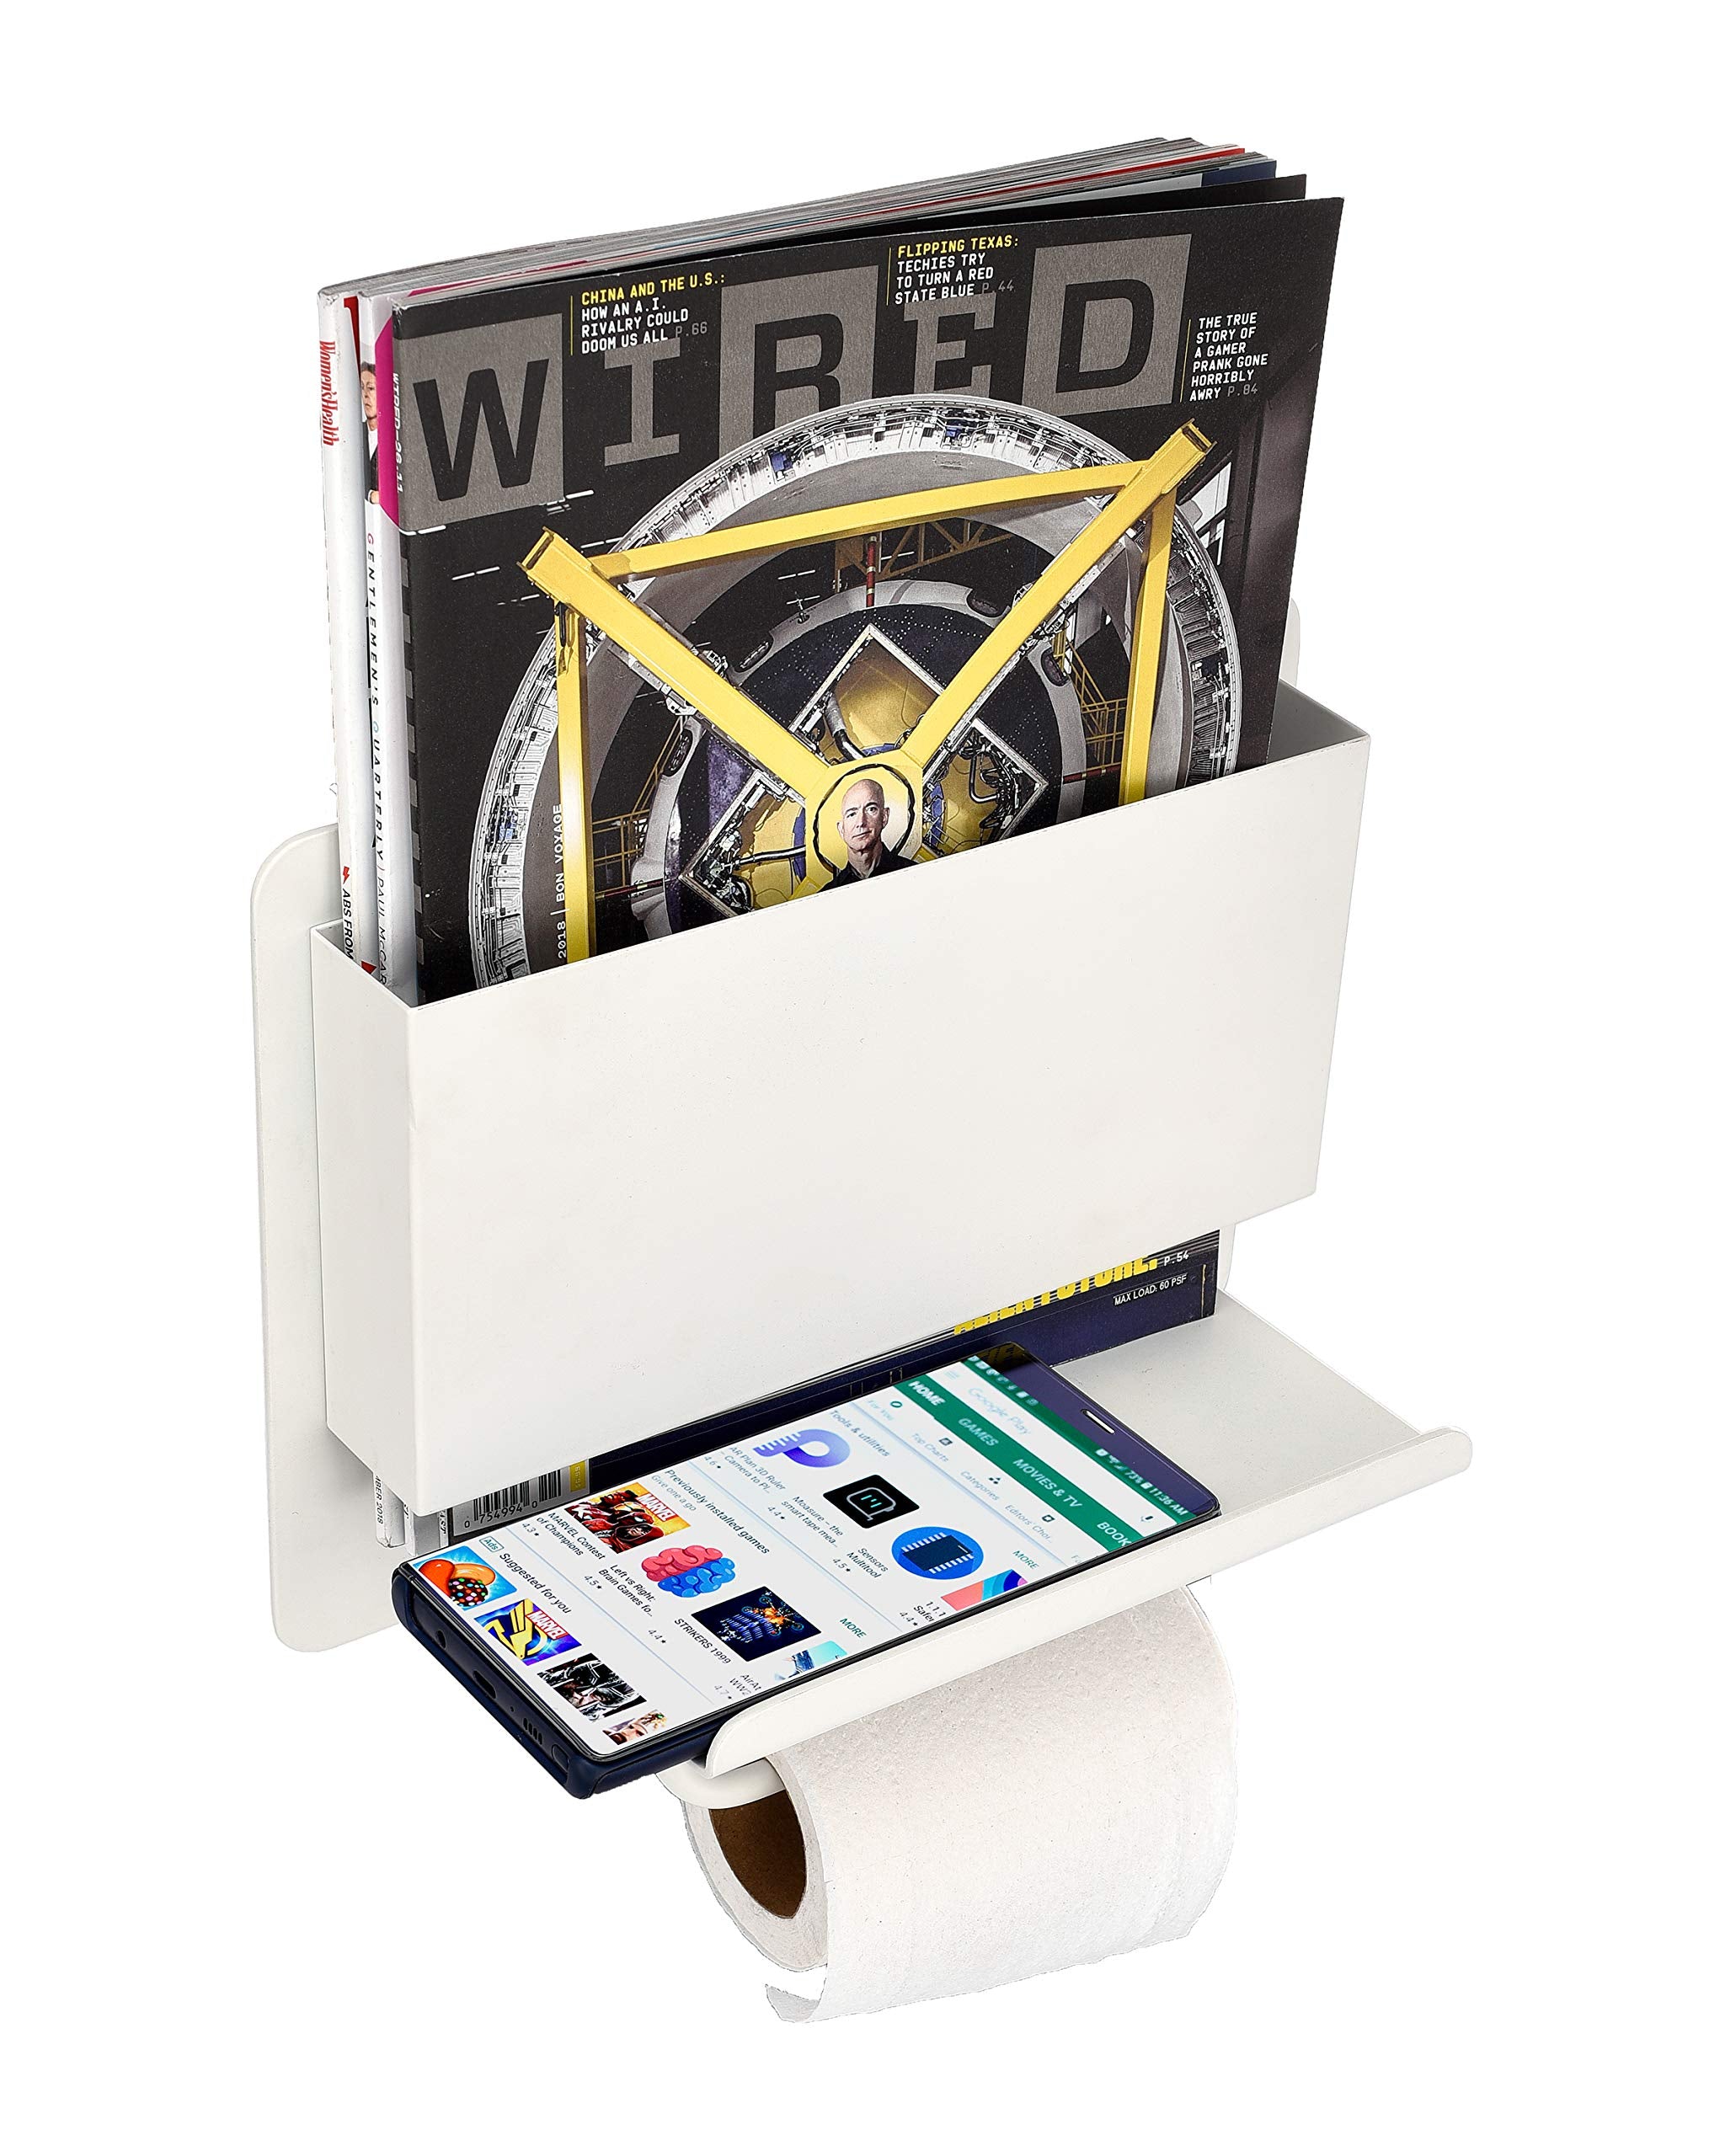 AdirHome All-in-One Bathroom Rack - Mounted Steel Toilet & Bath Organizer w/Tissue Holder - Space Saver & Organizing Storage Accessories for Bathroom & Pantry (White)  - Like New